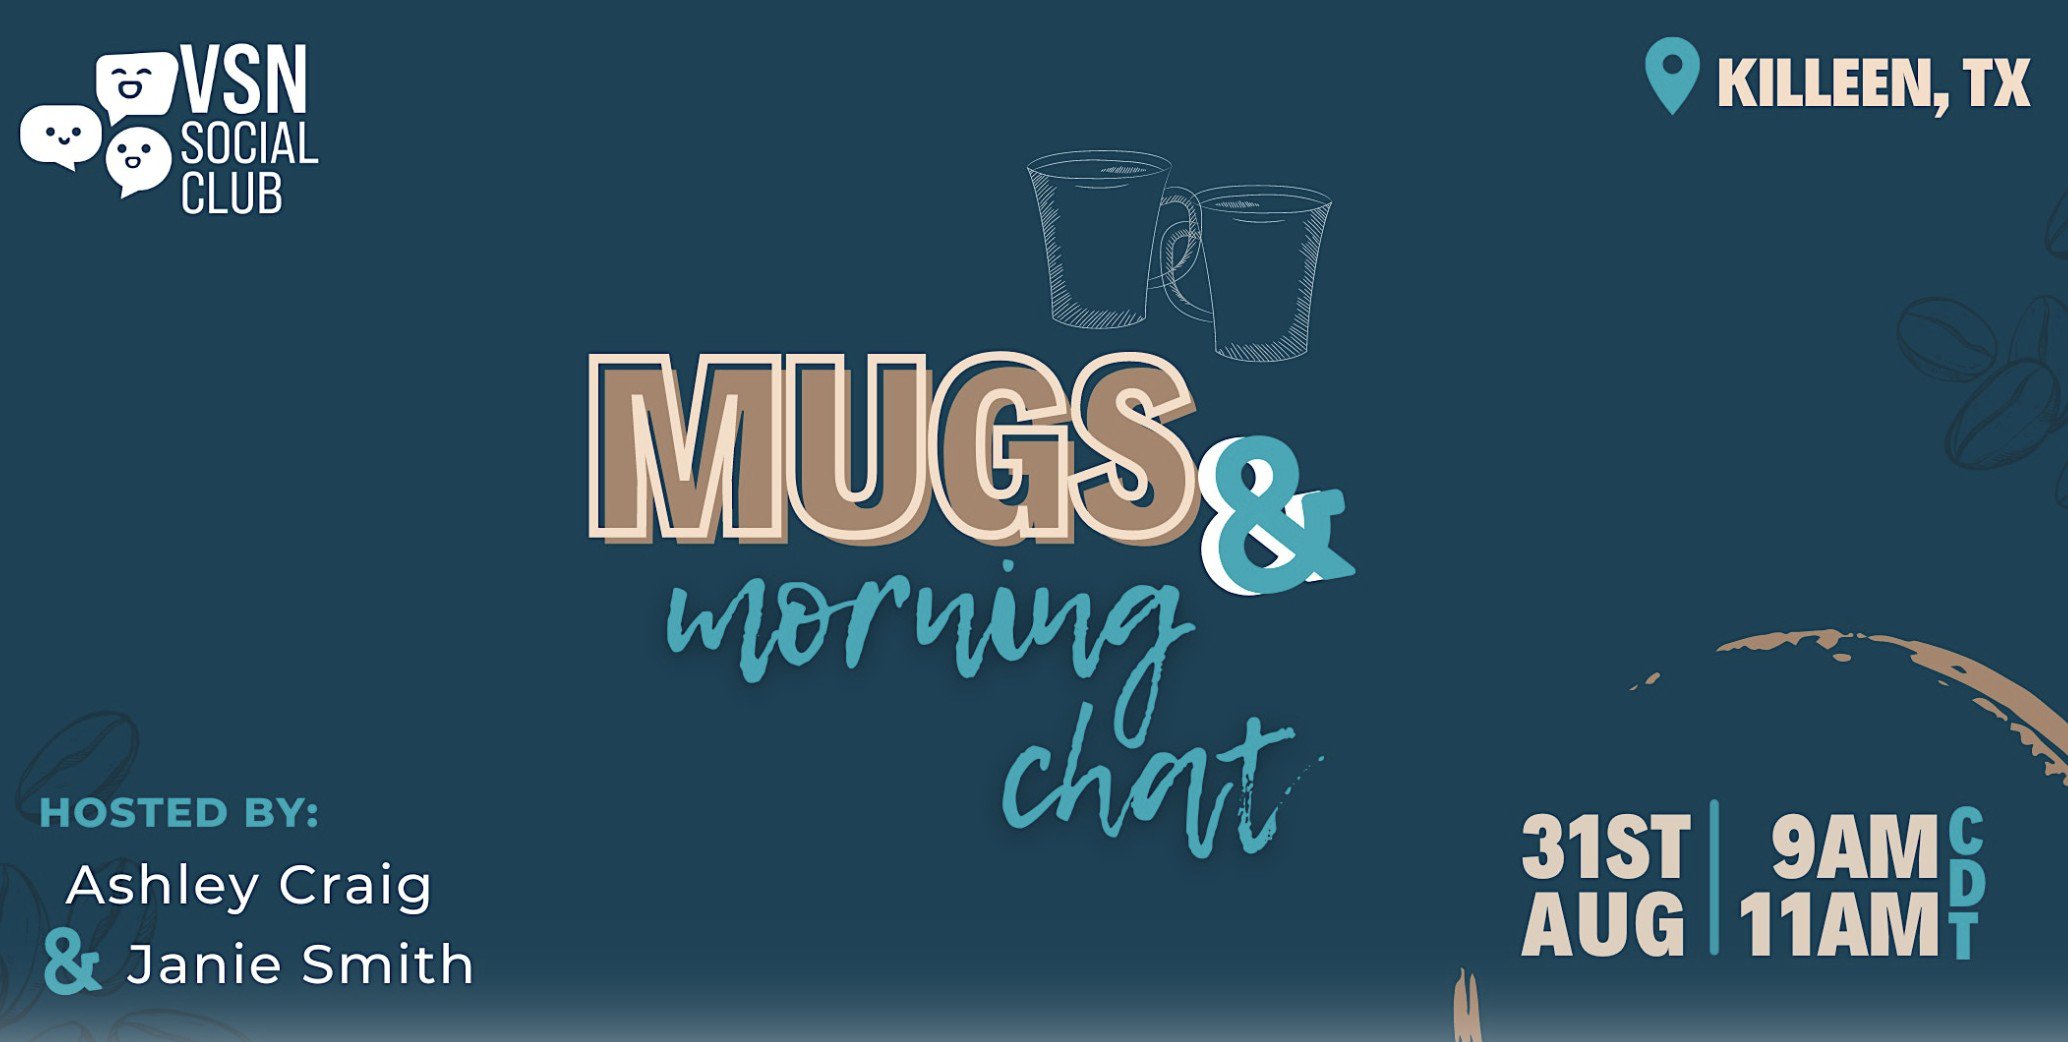 Mugs and Morning Chat